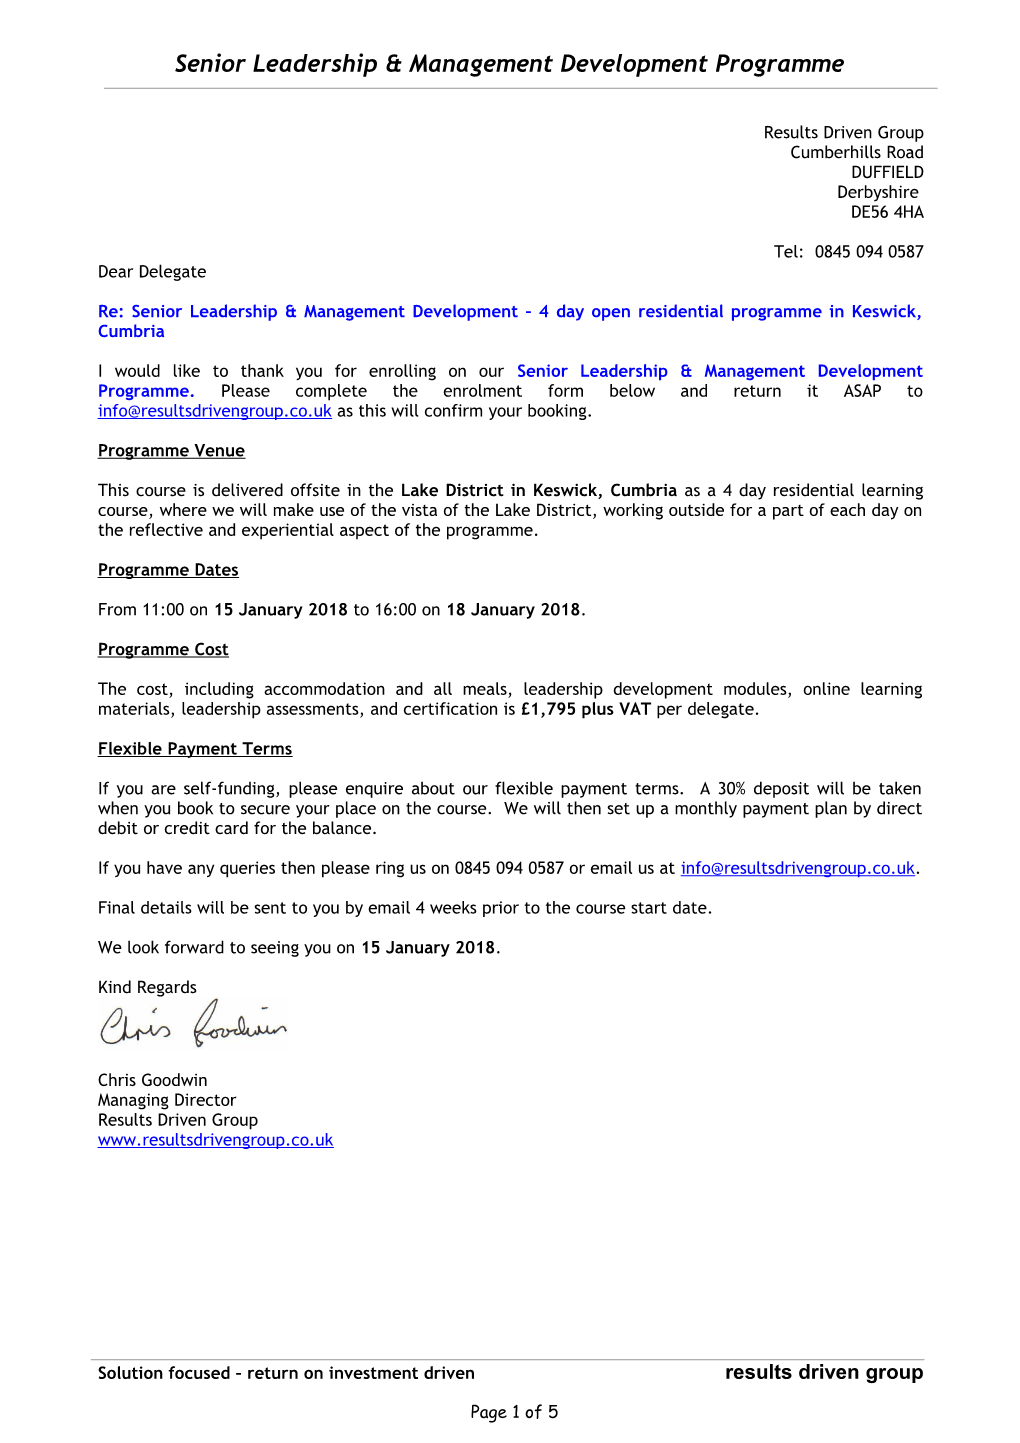 Re: Senior Leadership &Management Development 4 Day Open Residential Programme in Keswick